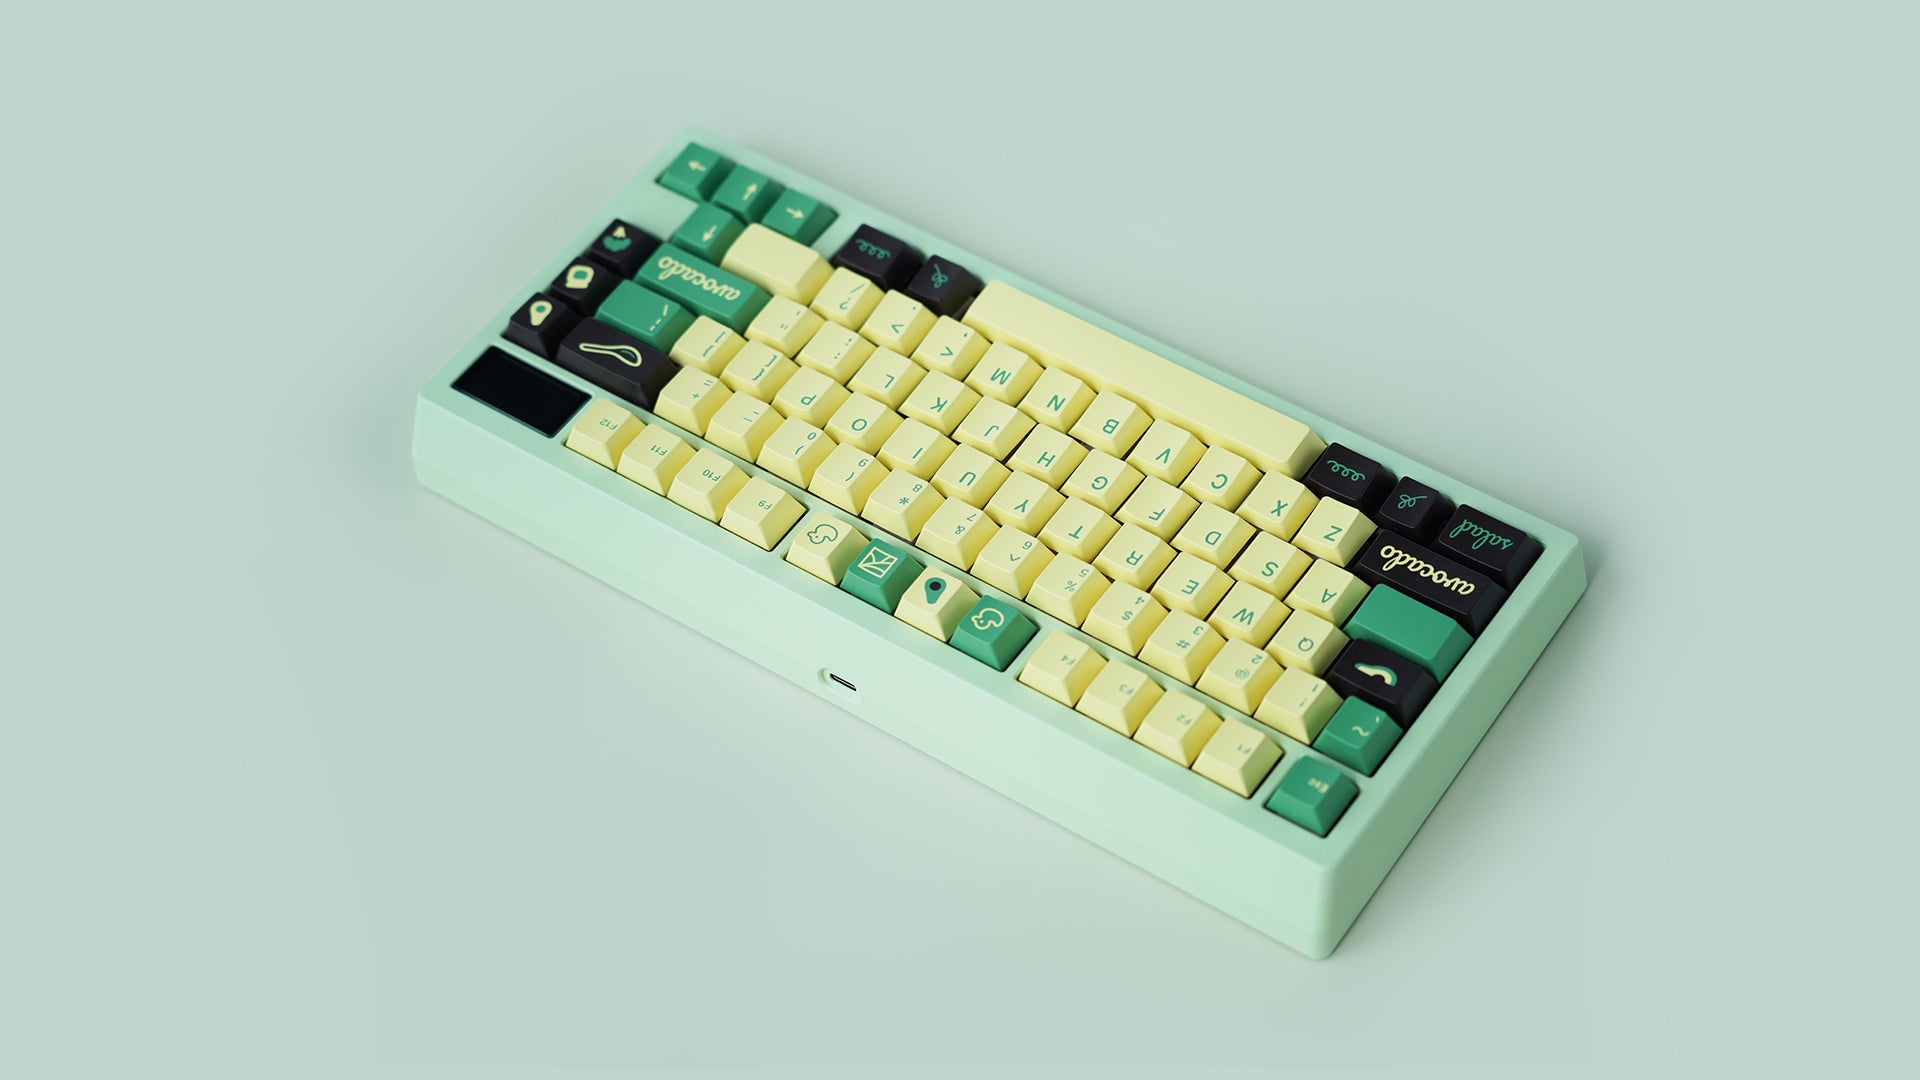 [Group-Buy] Meletrix Zoom75 Essential Edition (EE) - Barebones Keyboard Kit - Milky Green